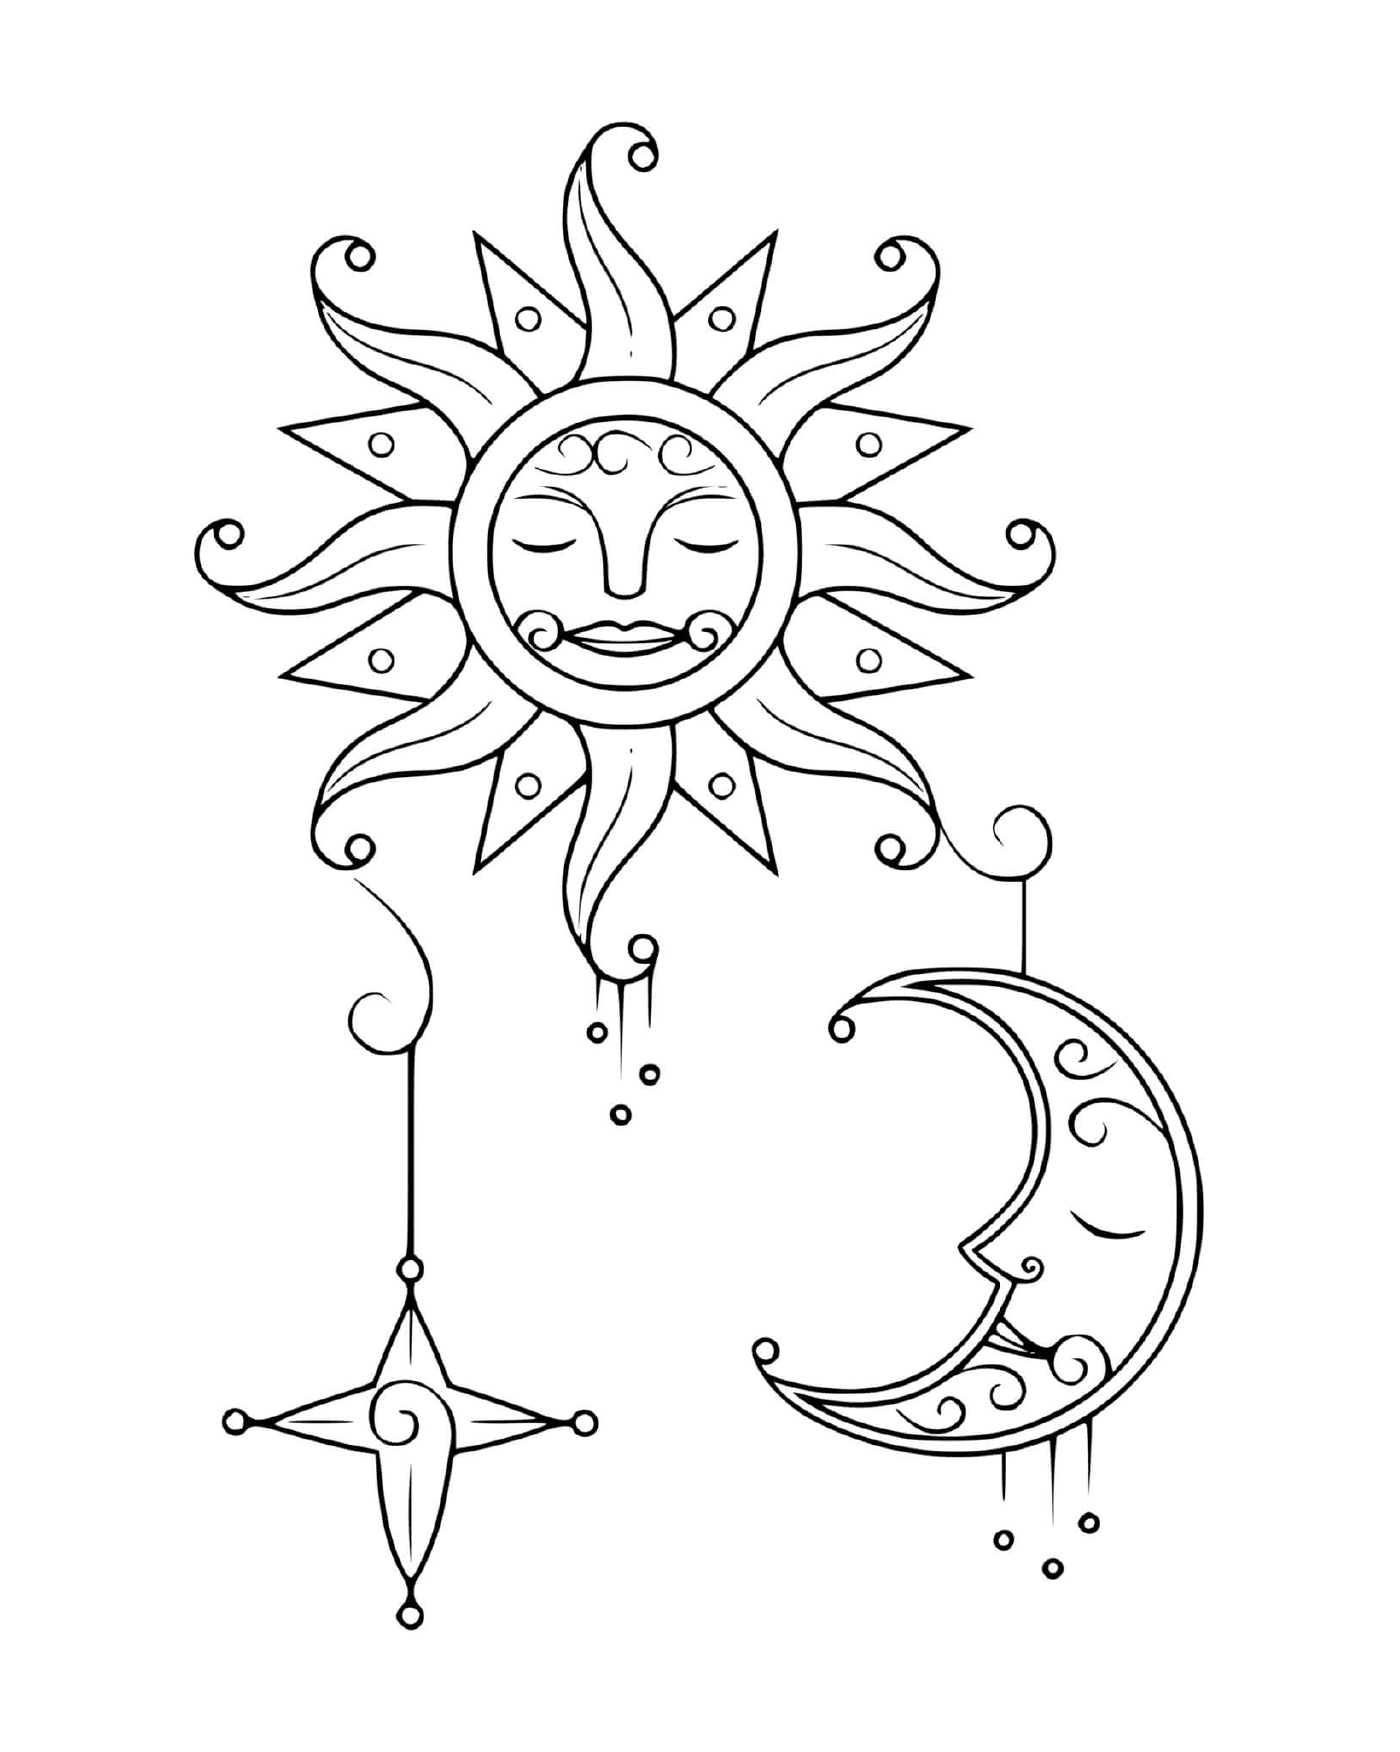  Sun and moon 